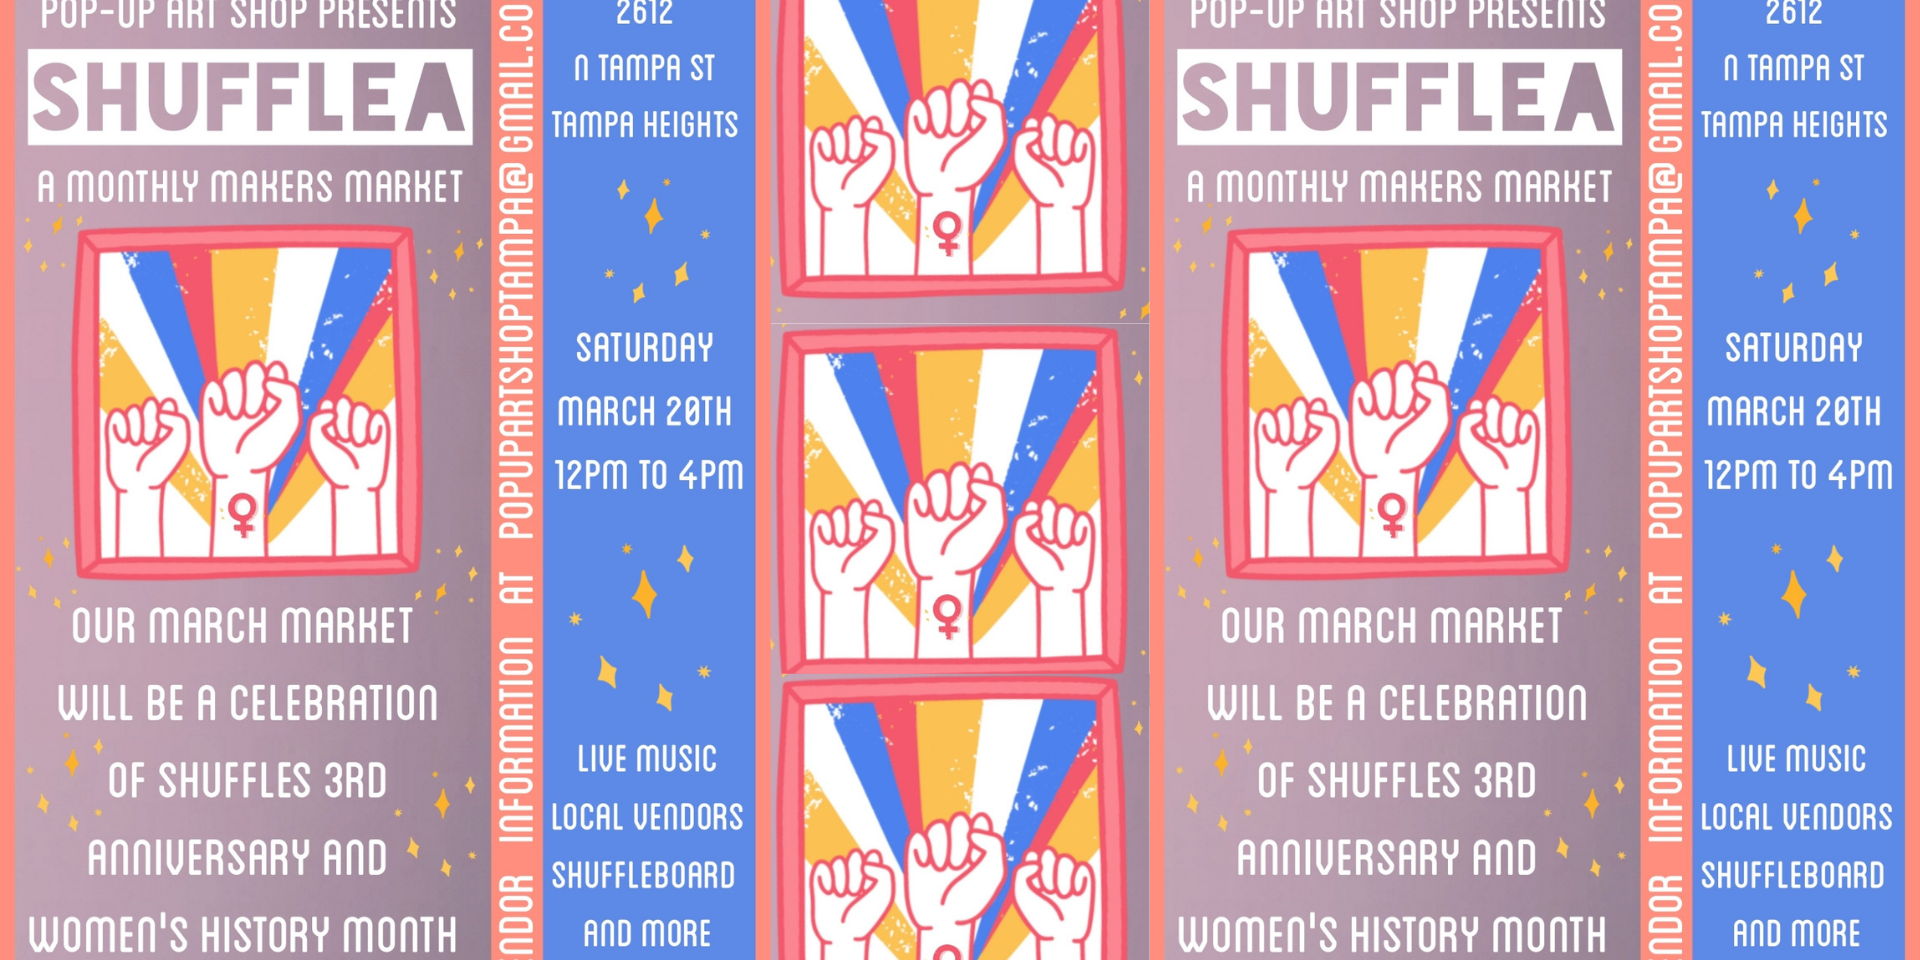 Shufflea promotional image